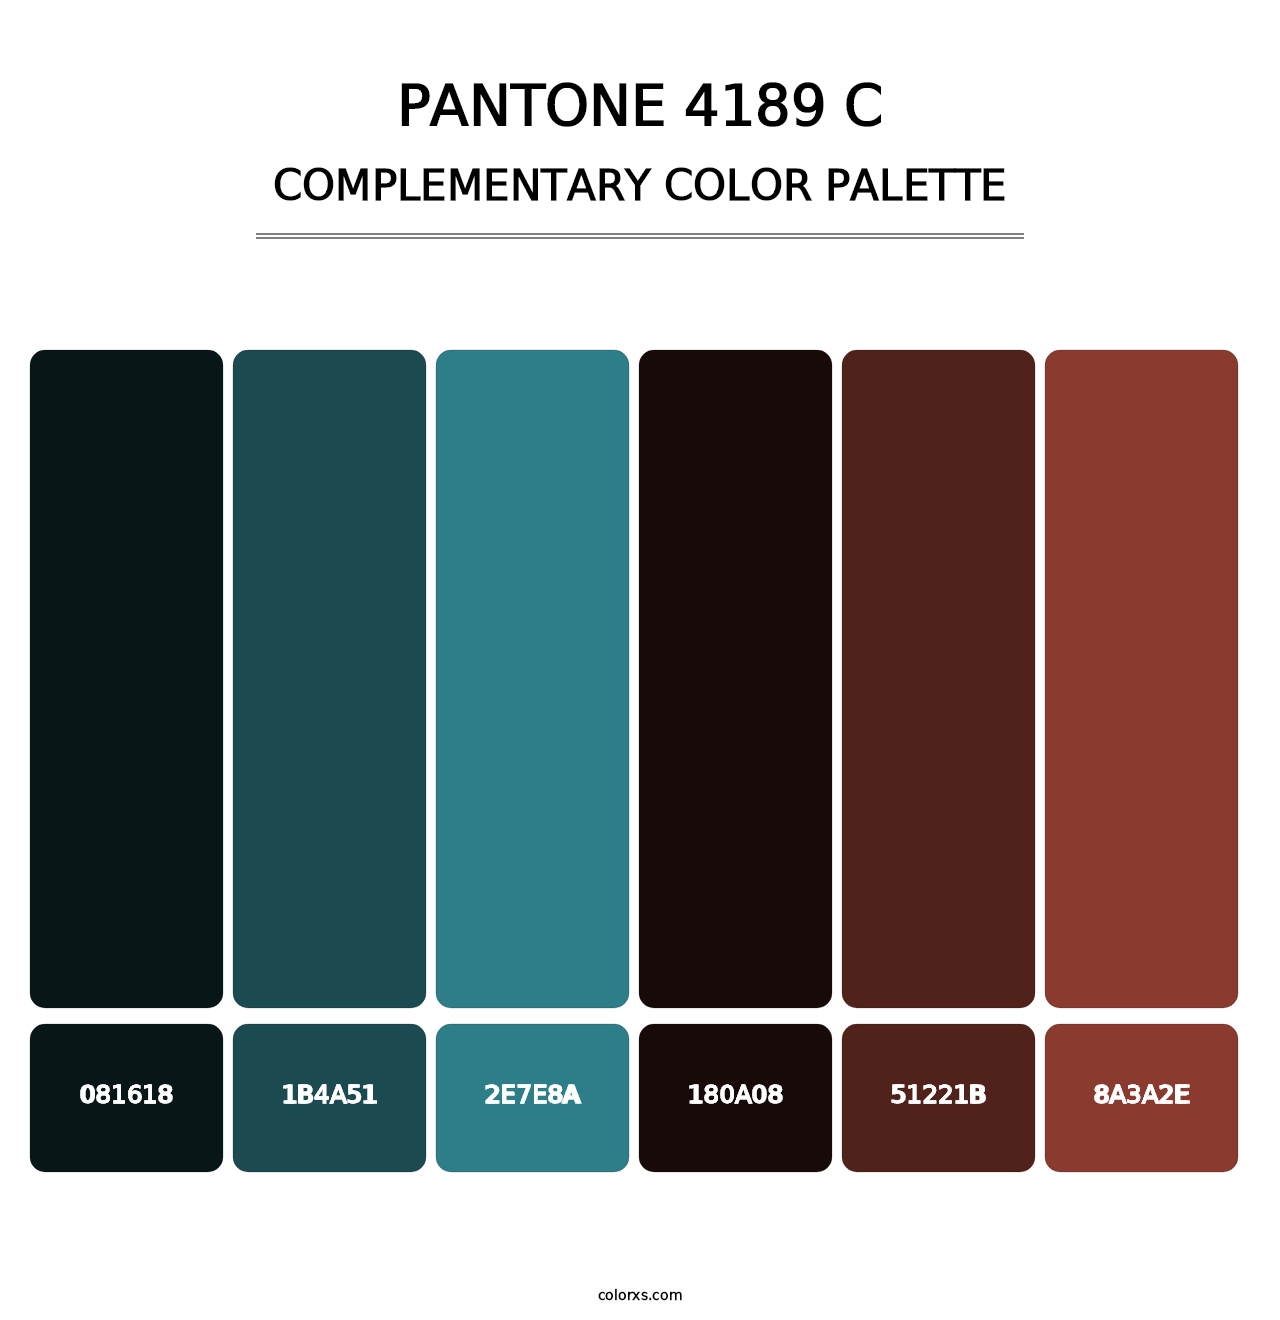 PANTONE 4189 C - Complementary Color Palette